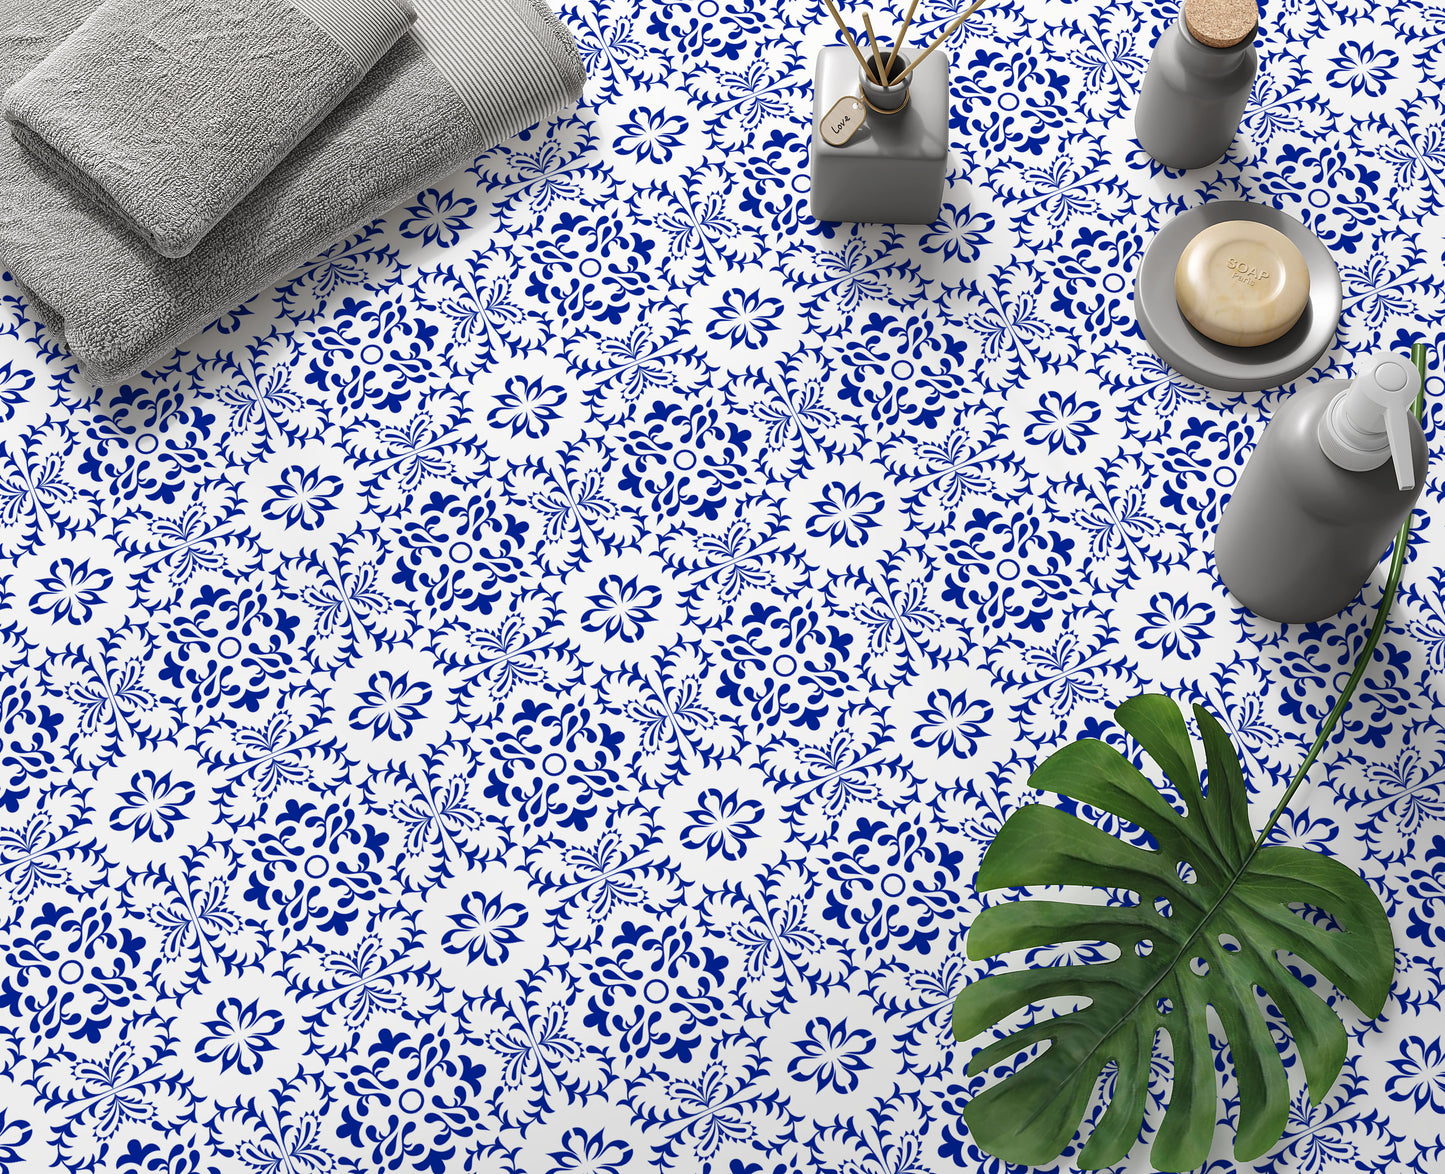 Blue Decorative Flourishing Pattern Removable Tile Stickers